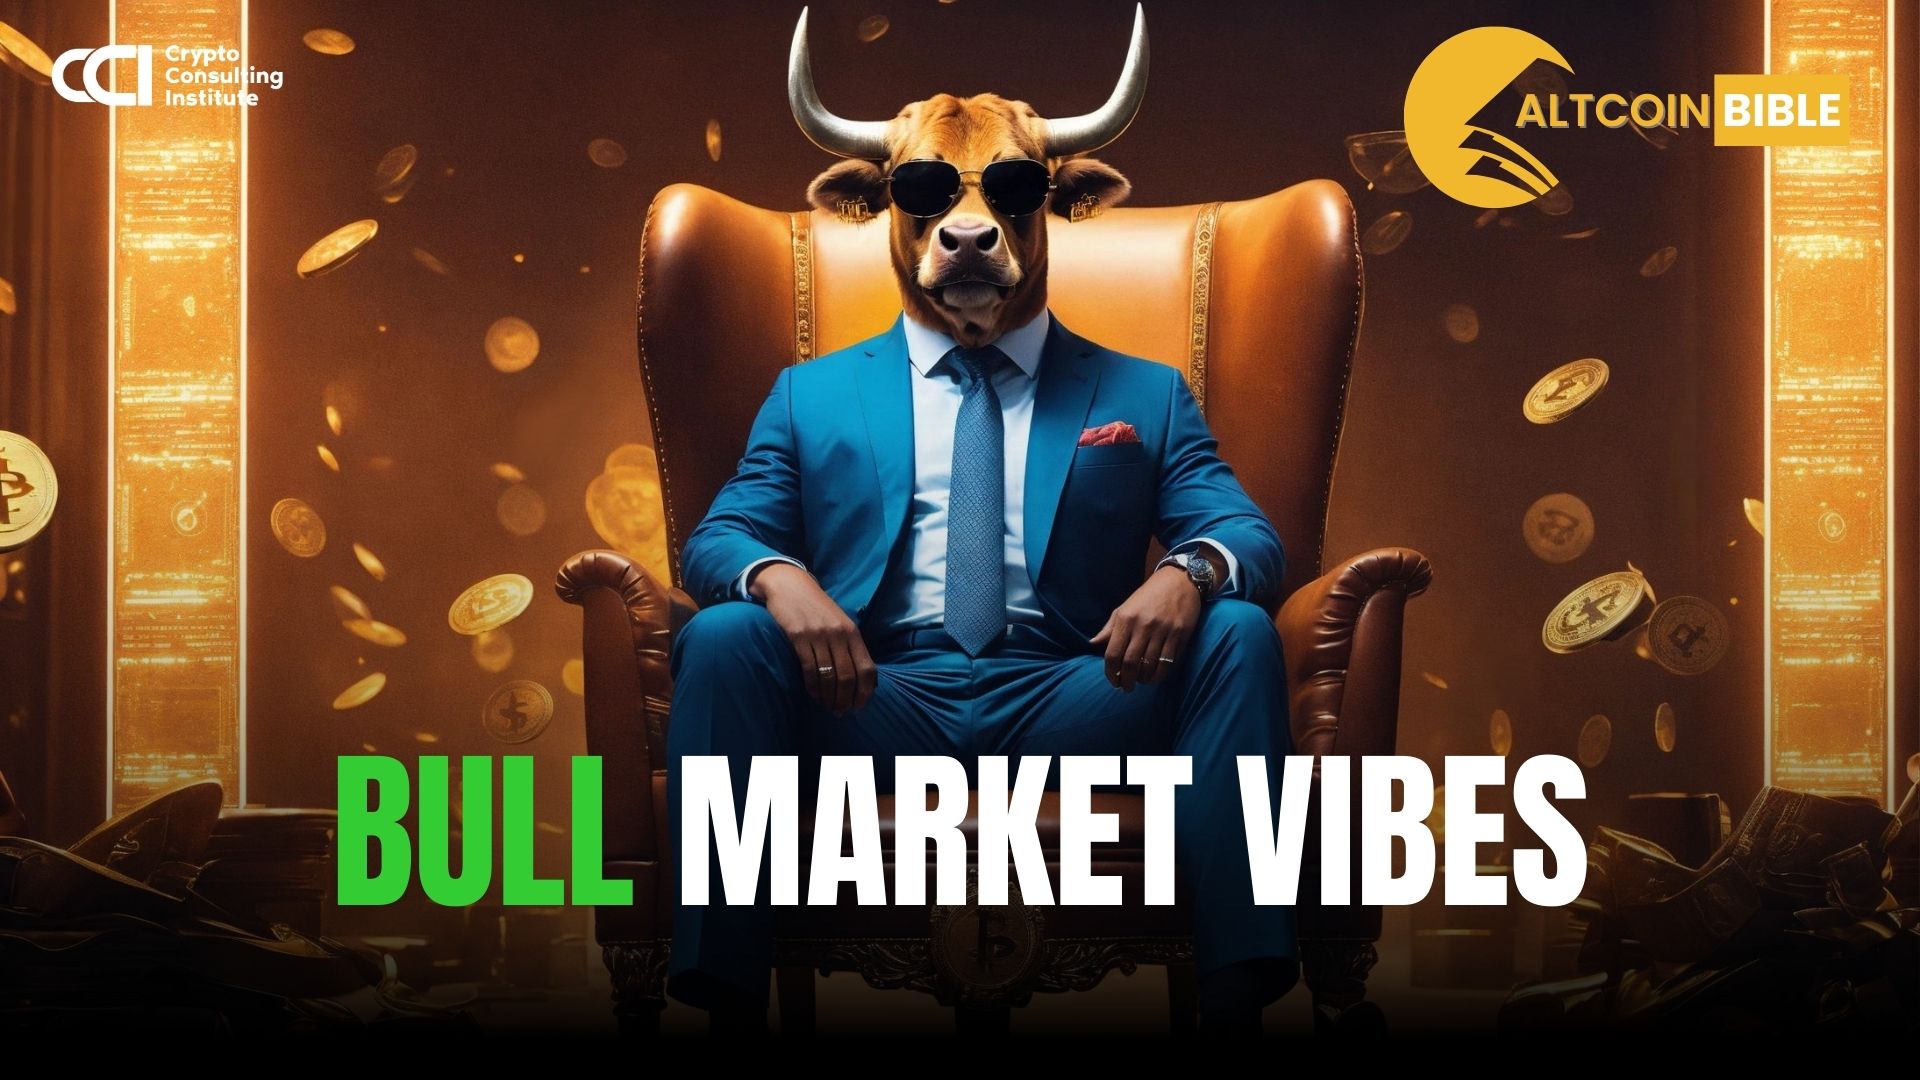 Bull market vibes